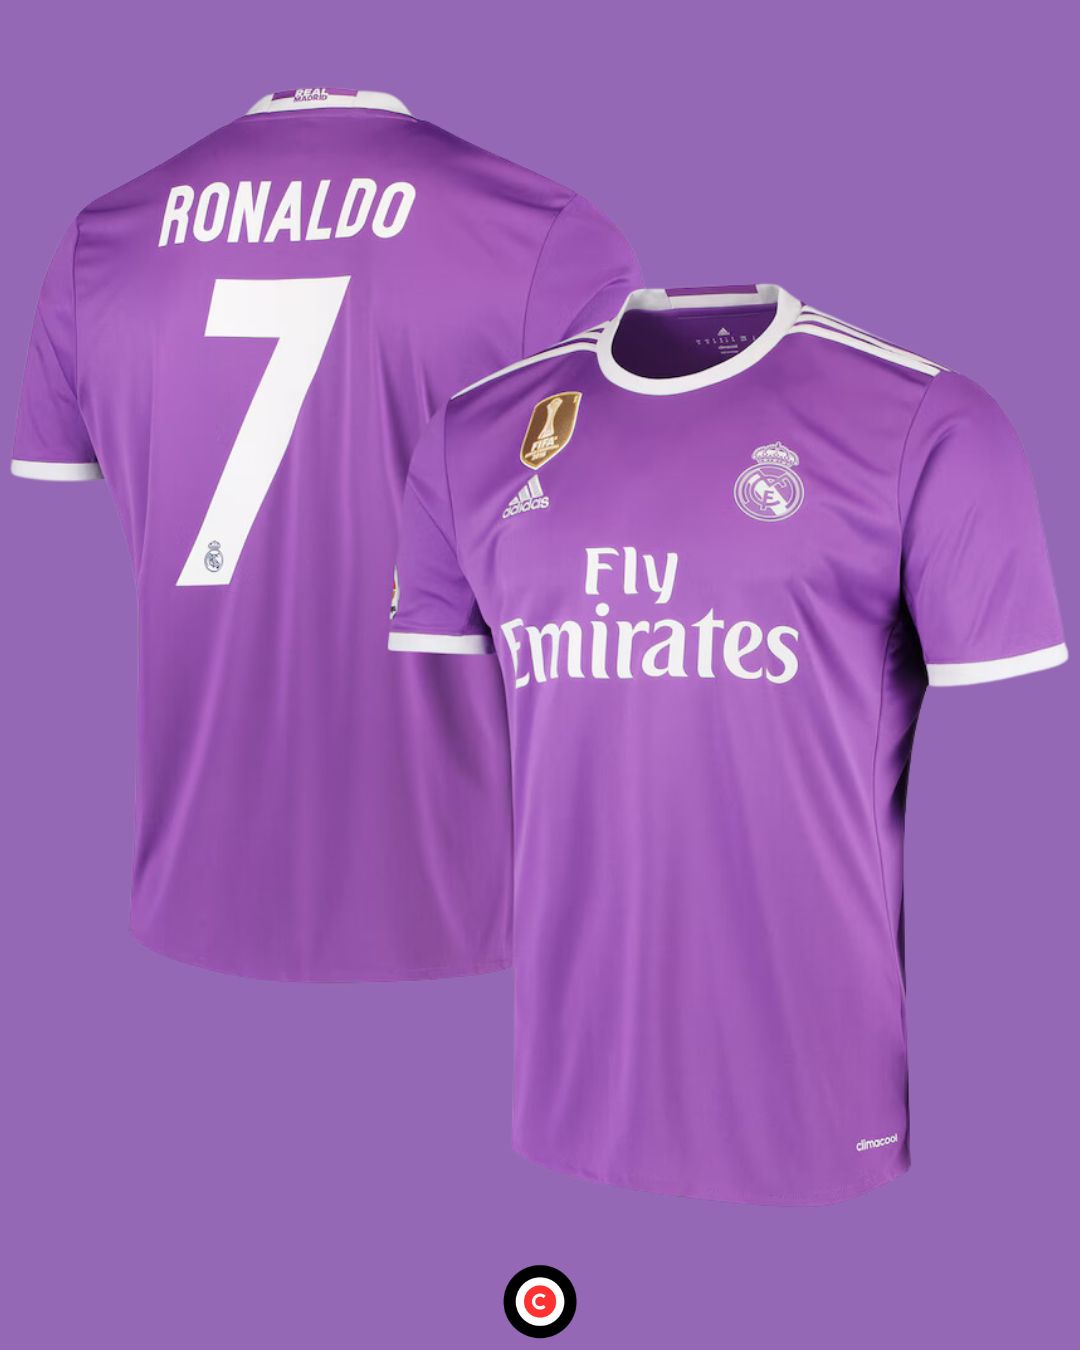 Real Madrid 16/17 (Away Kit) - Premium  from CatenaccioDesigns - Just €60.99! Shop now at CatenaccioDesigns